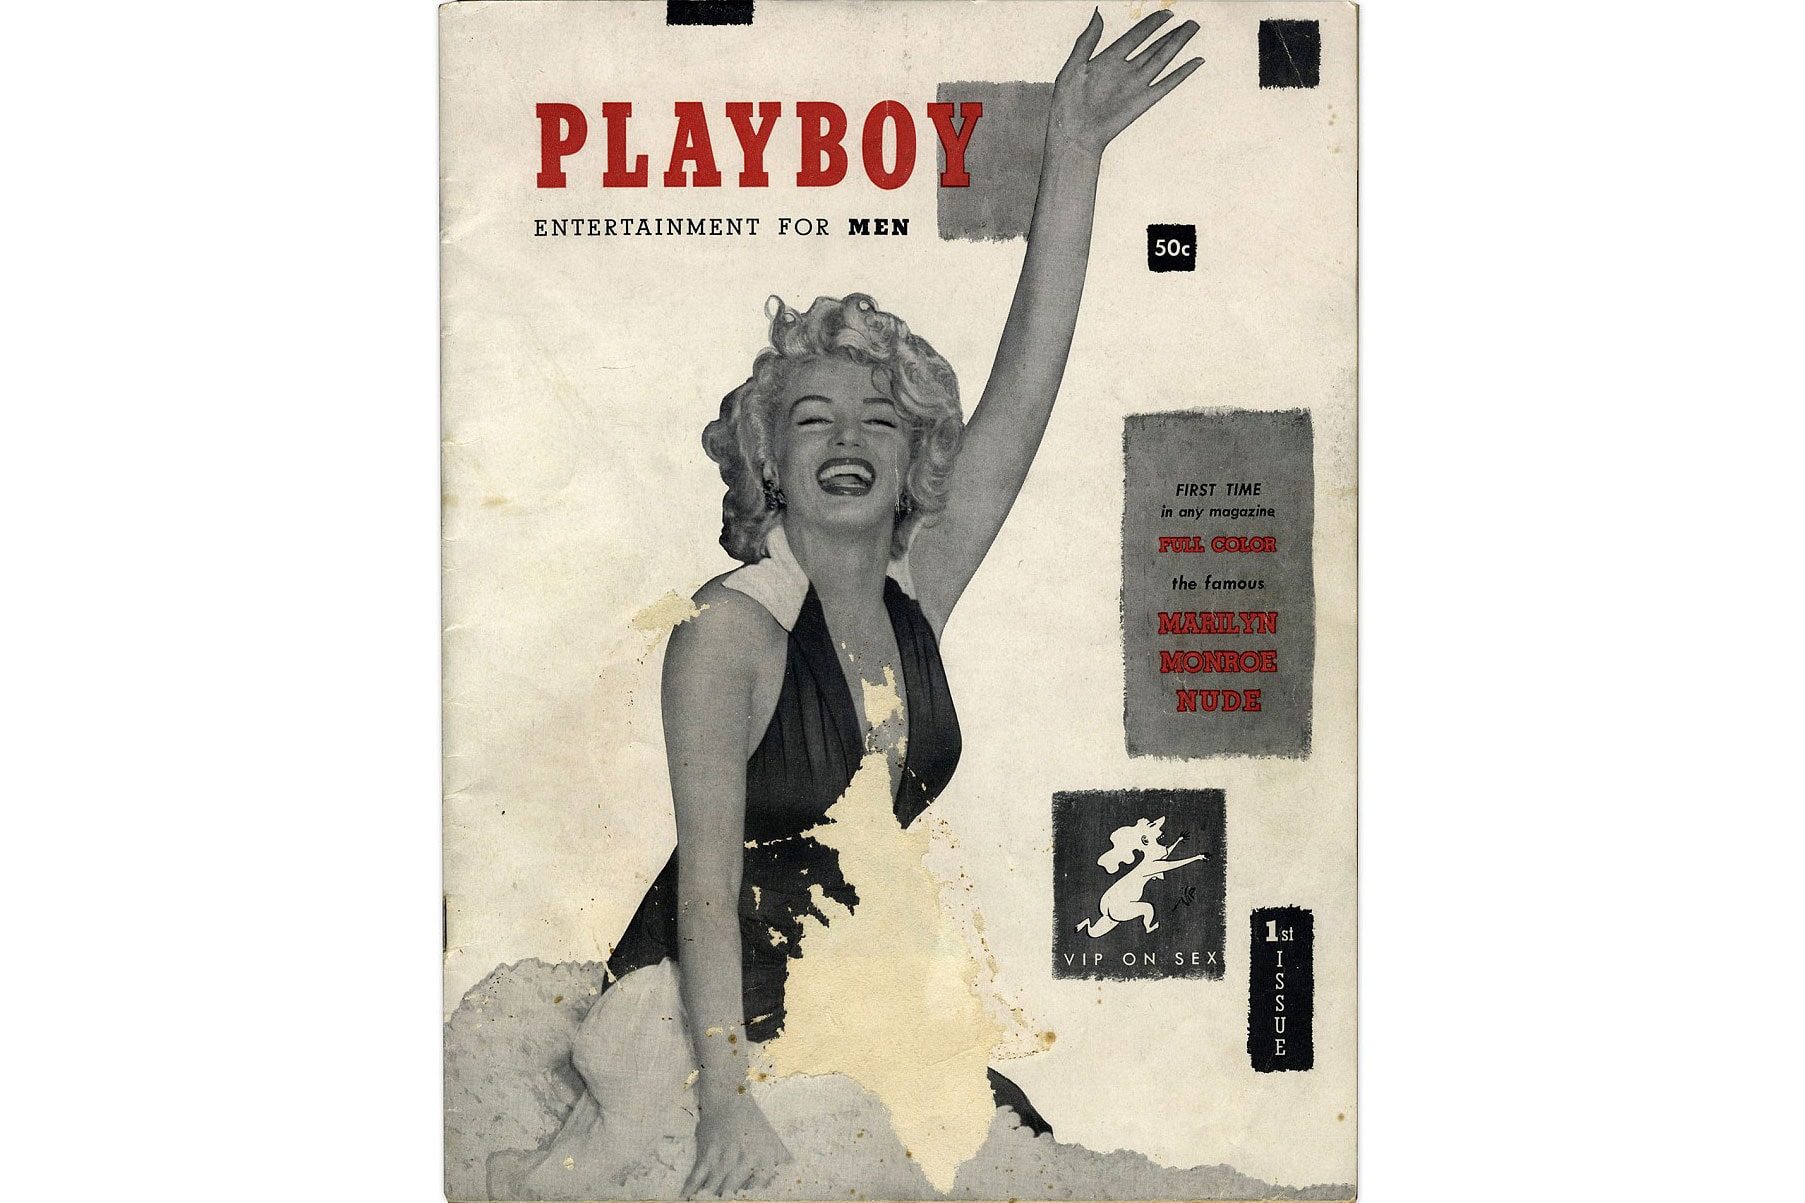 Hugh Hefner Laid to Rest Buried Burial Playboy Cover Star Marilyn Monroe Playmate